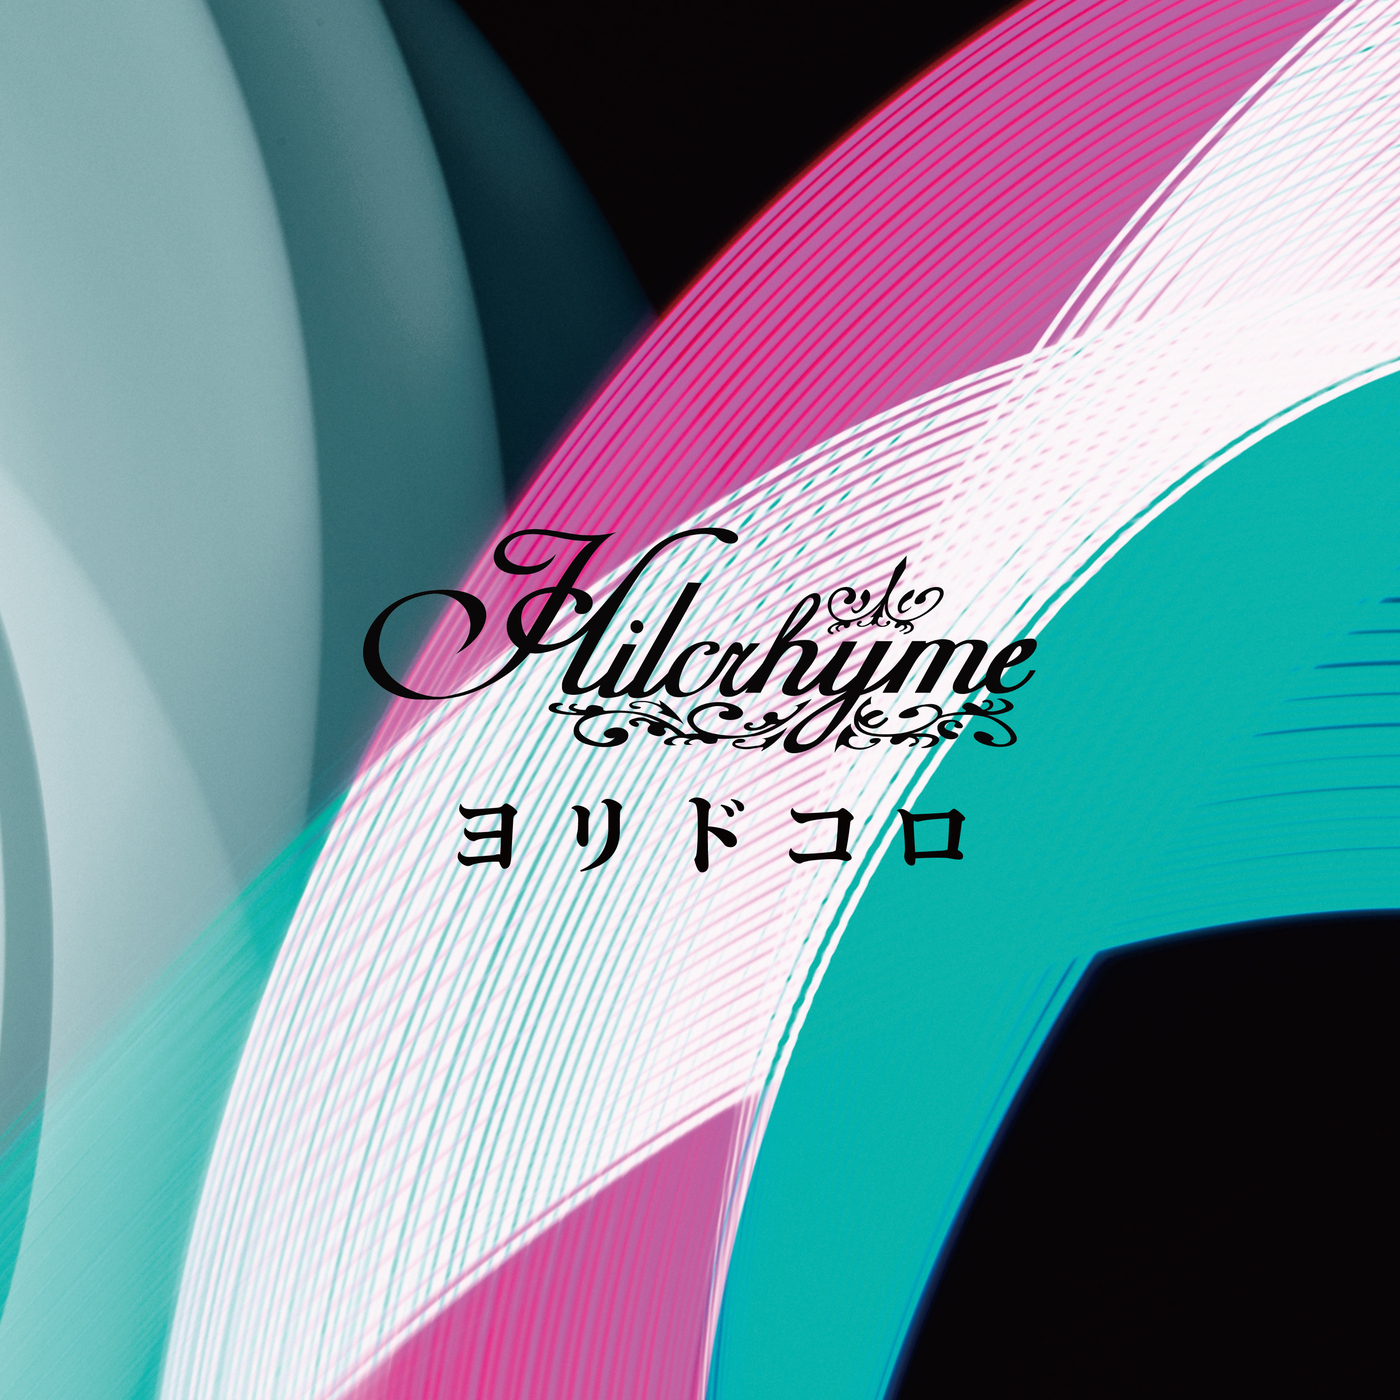 Hilcrhyme - Yoridokoro